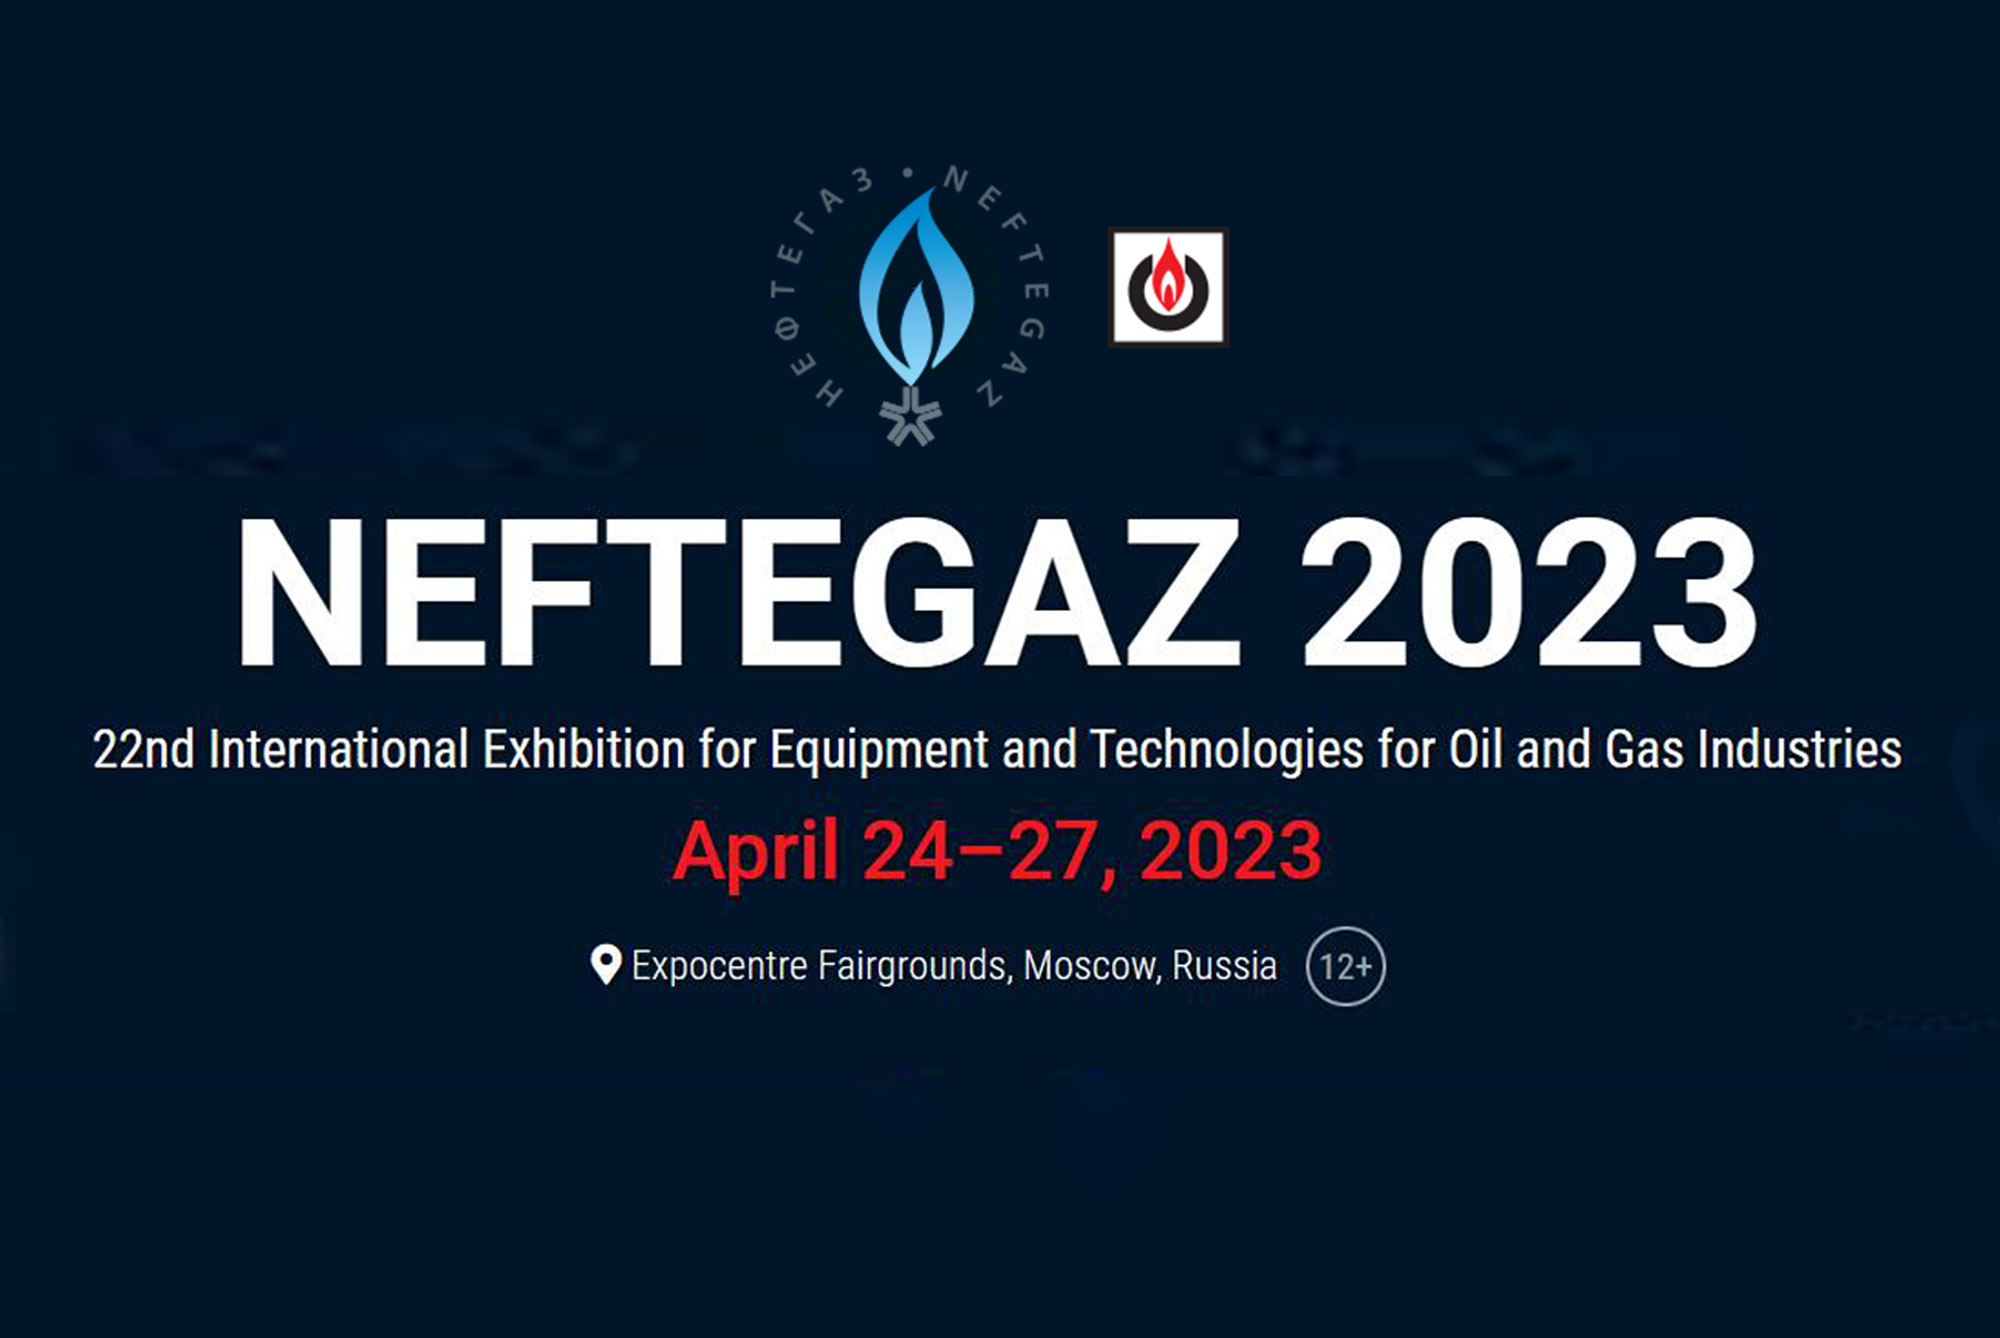 NEFTEGAZ 2023 See More